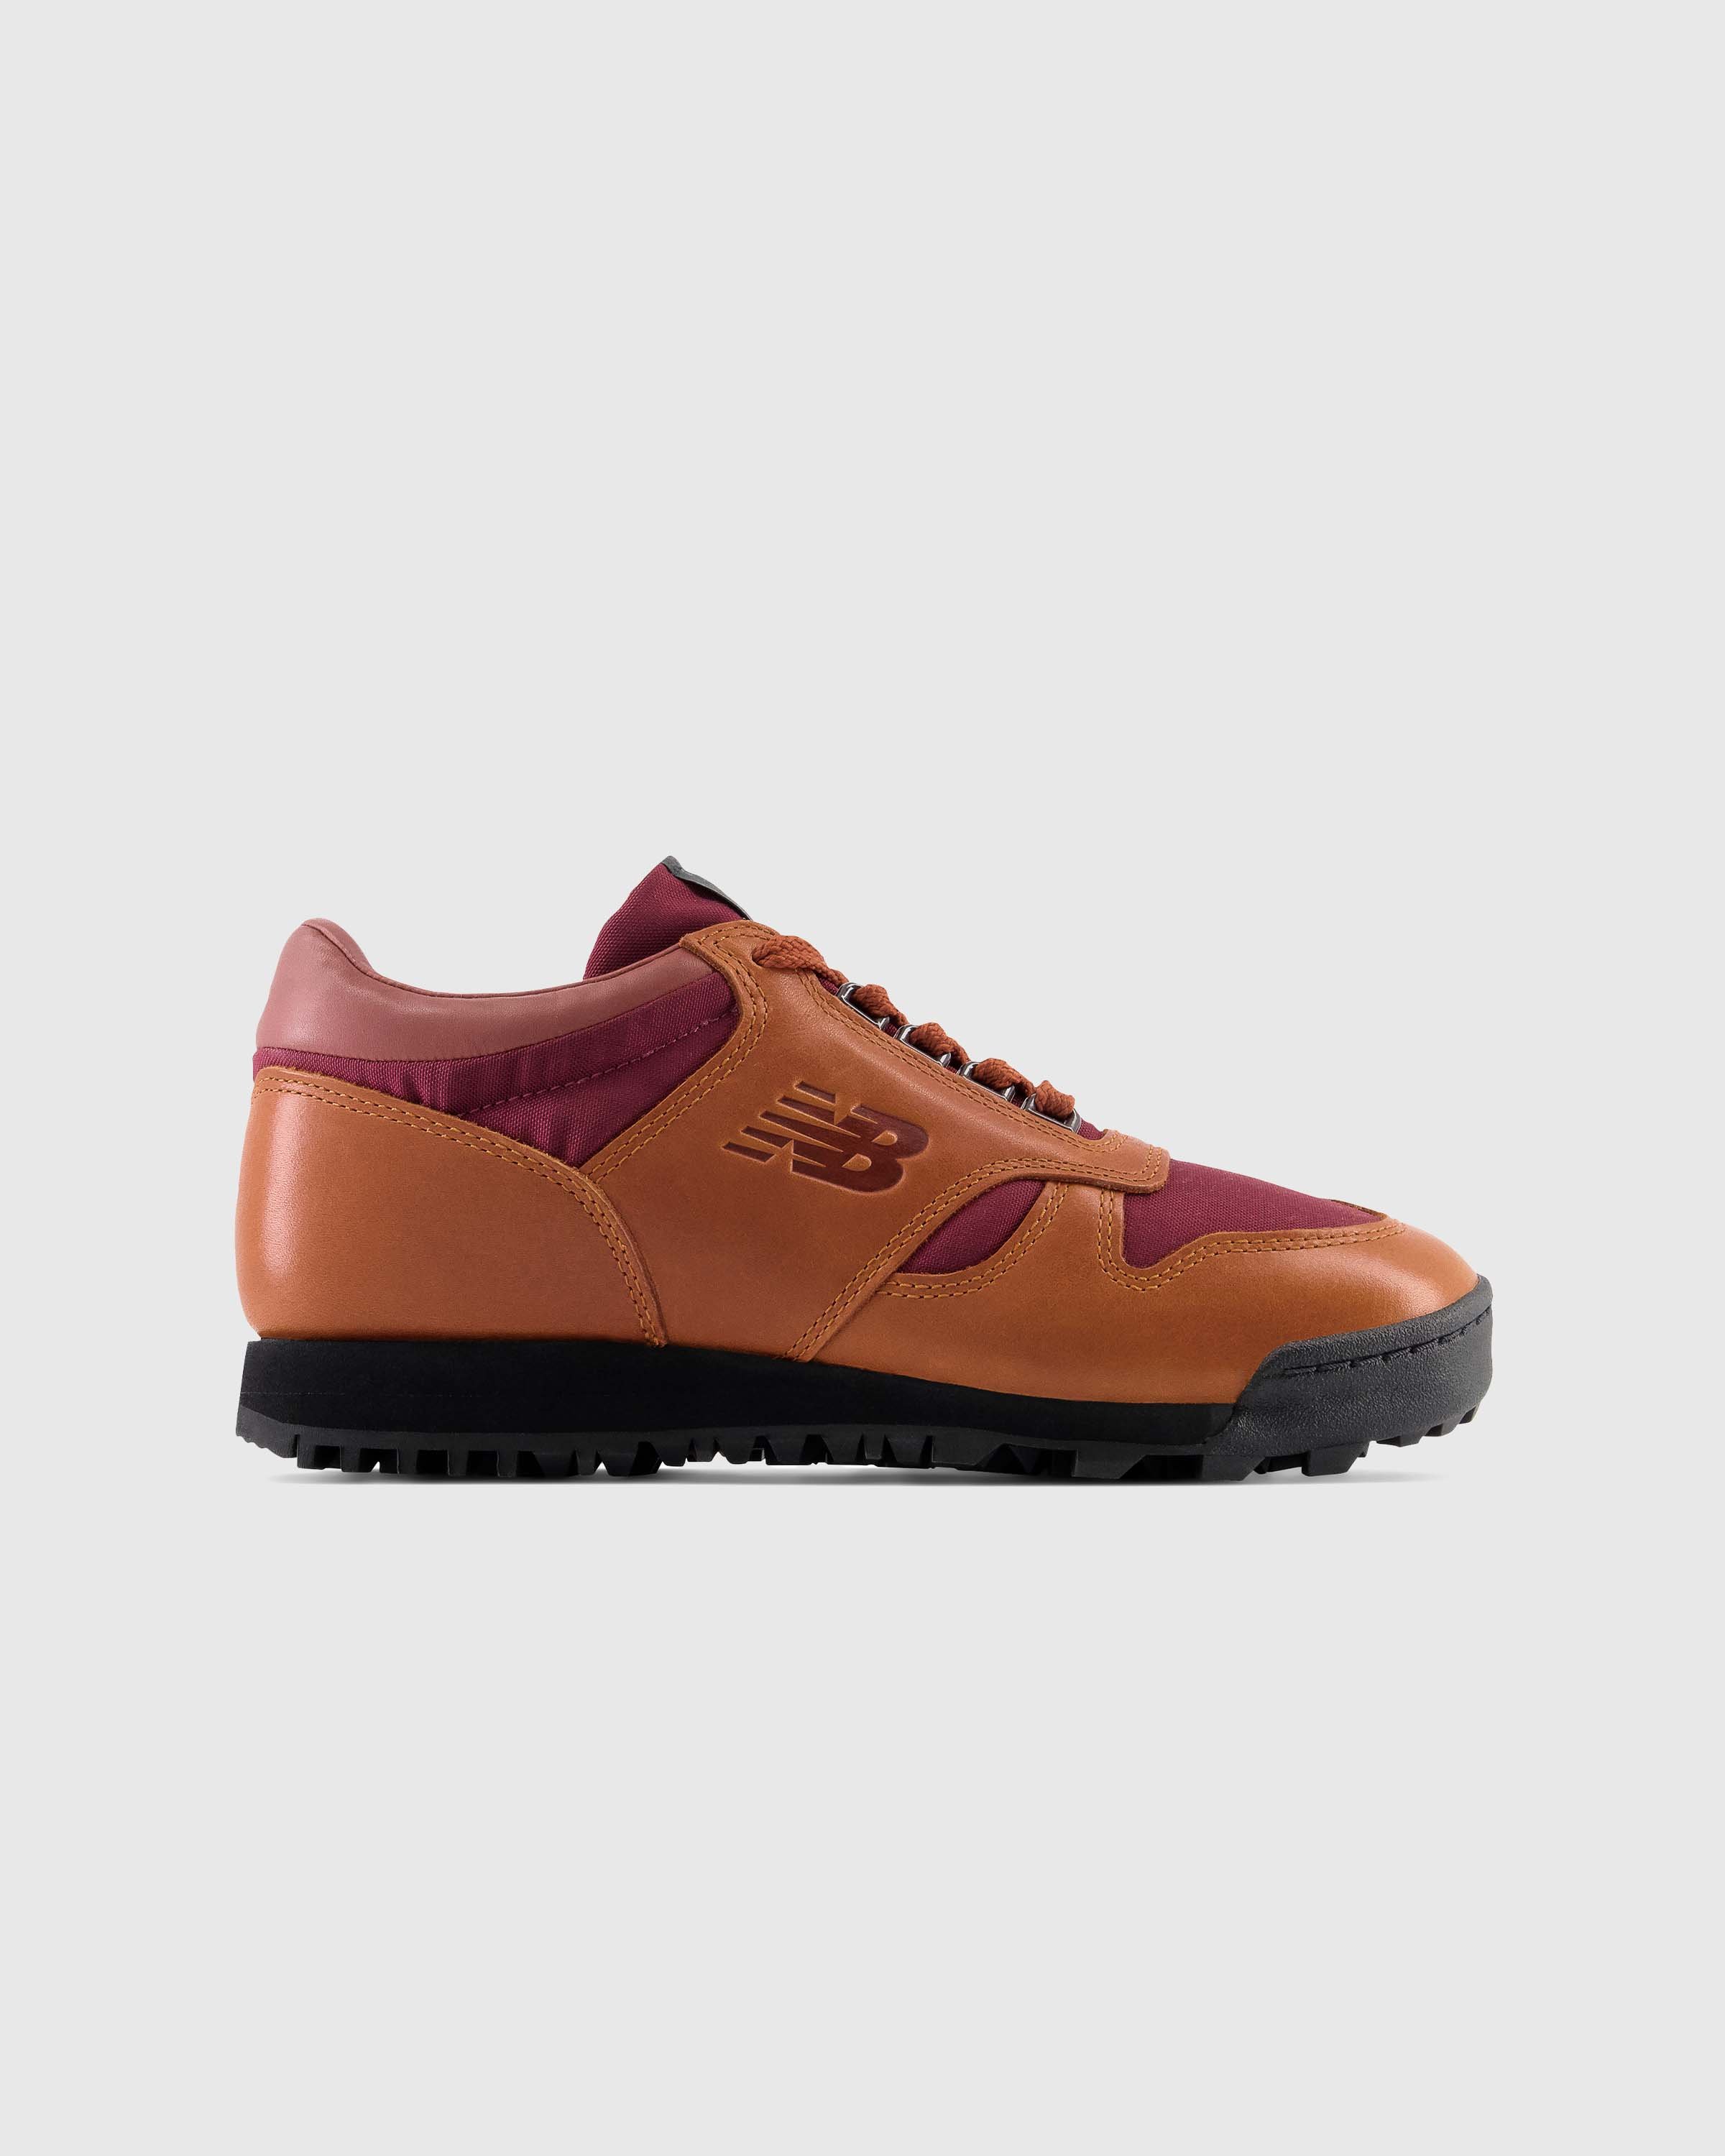 New Balance - UALGSOG Tan - Footwear - Brown - Image 1